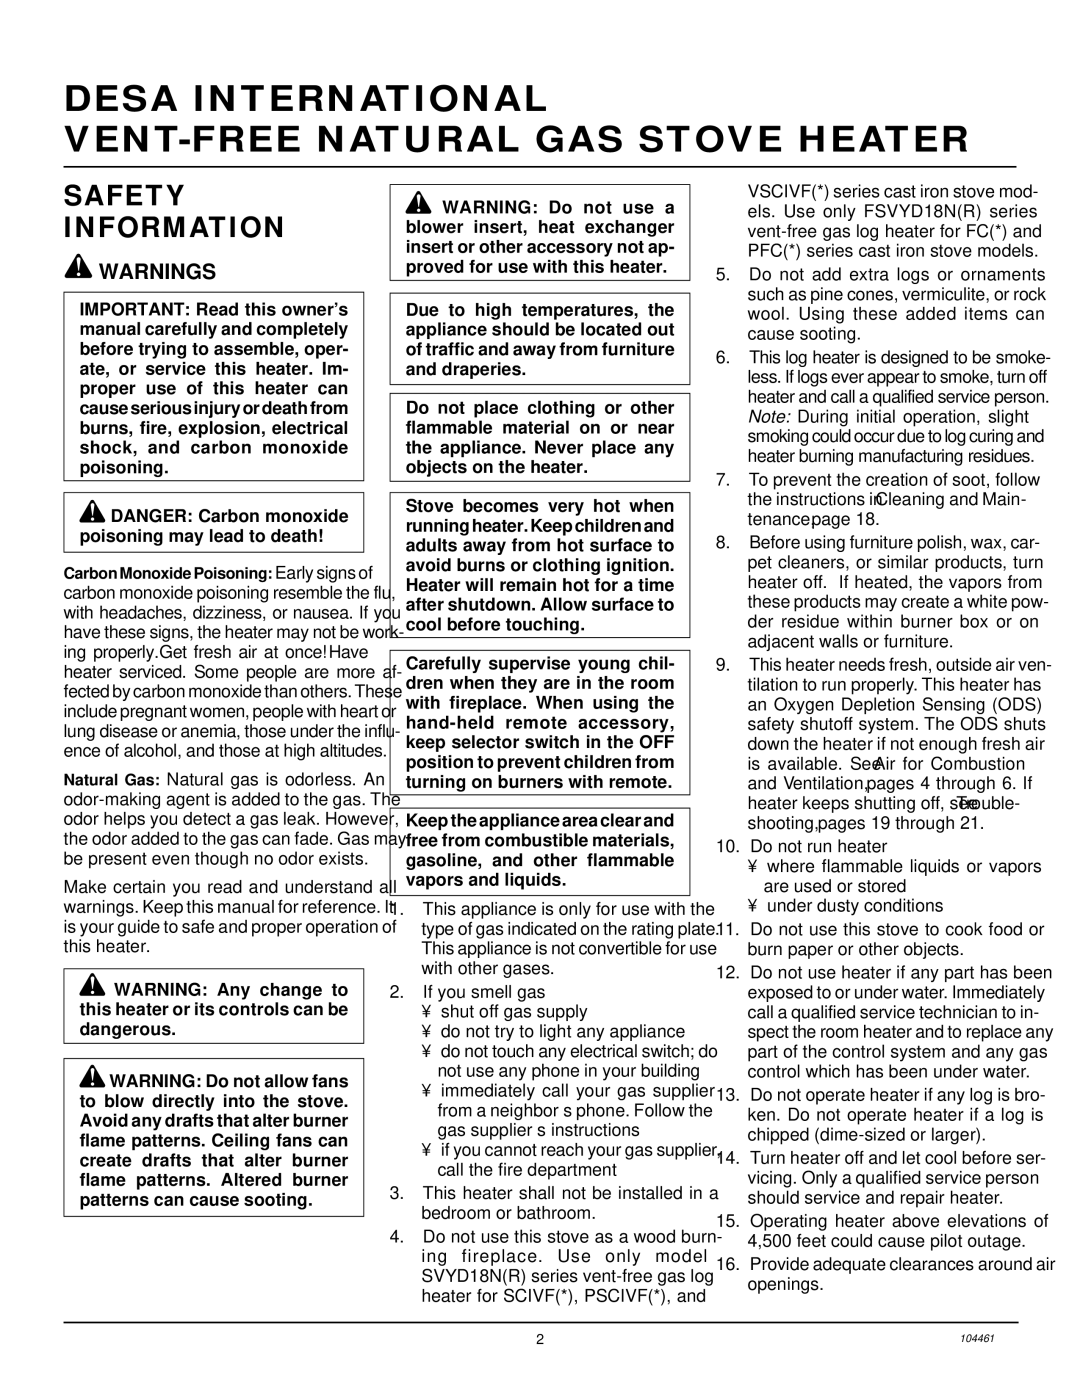 Desa (F)SVYD18NR installation manual Desa International VENT-FREE Natural GAS Stove Heater, Safety Information 